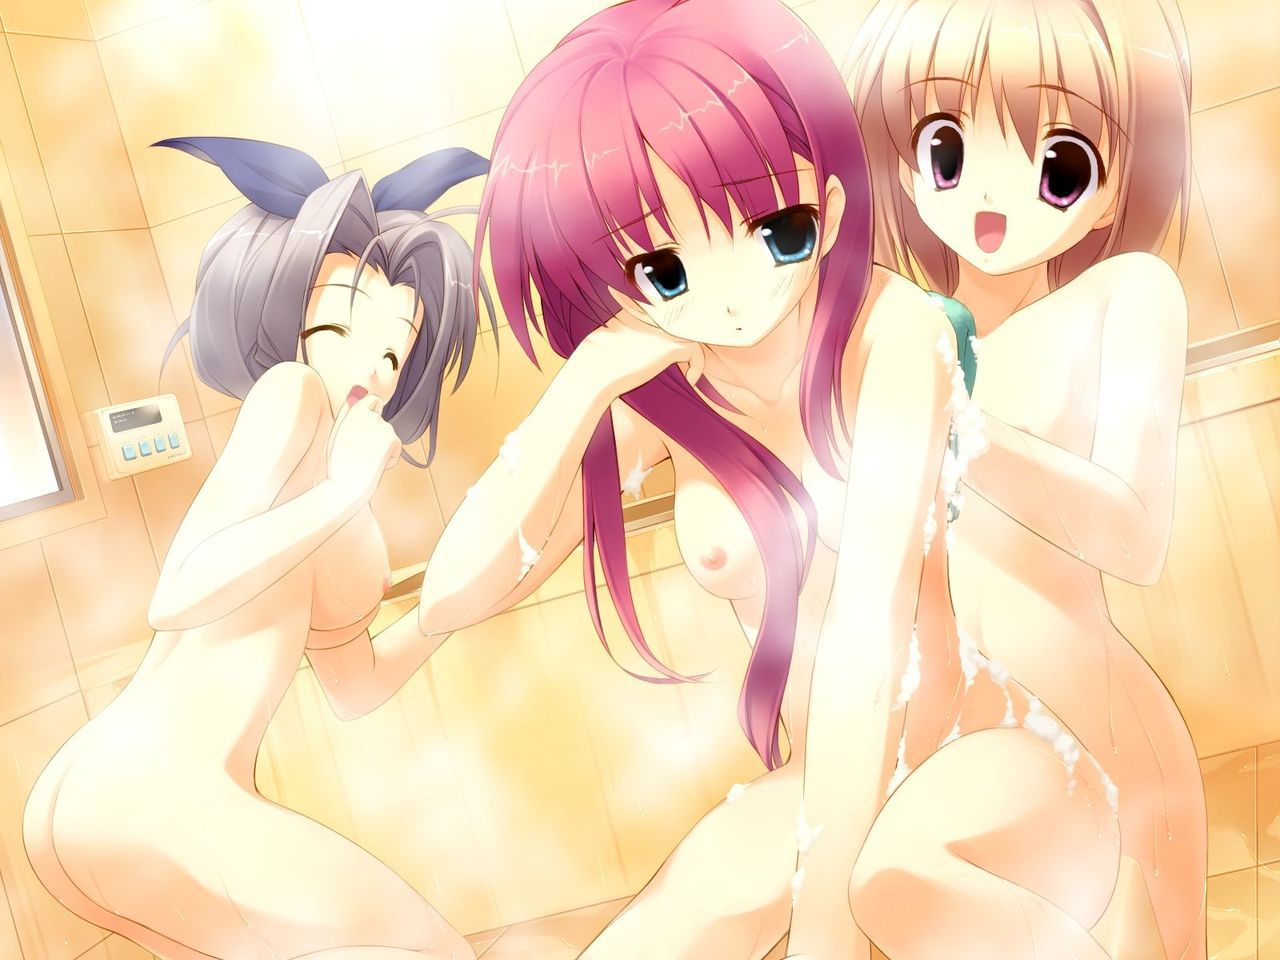 Today's Saku is a random secondary erotic image! Part 4 12